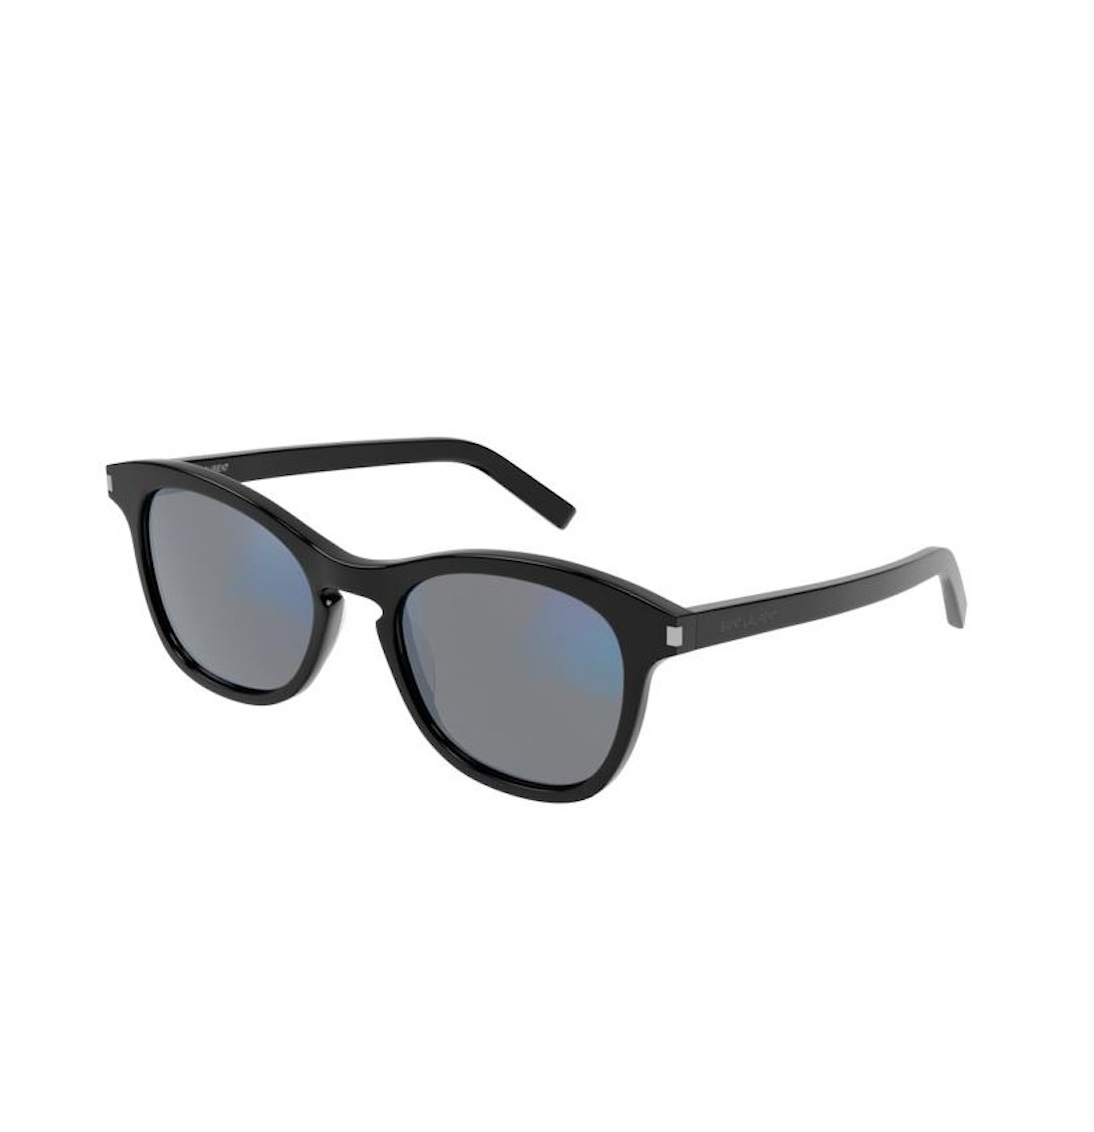 Yves Saint Laurent SL-356-017 49mm New Sunglasses